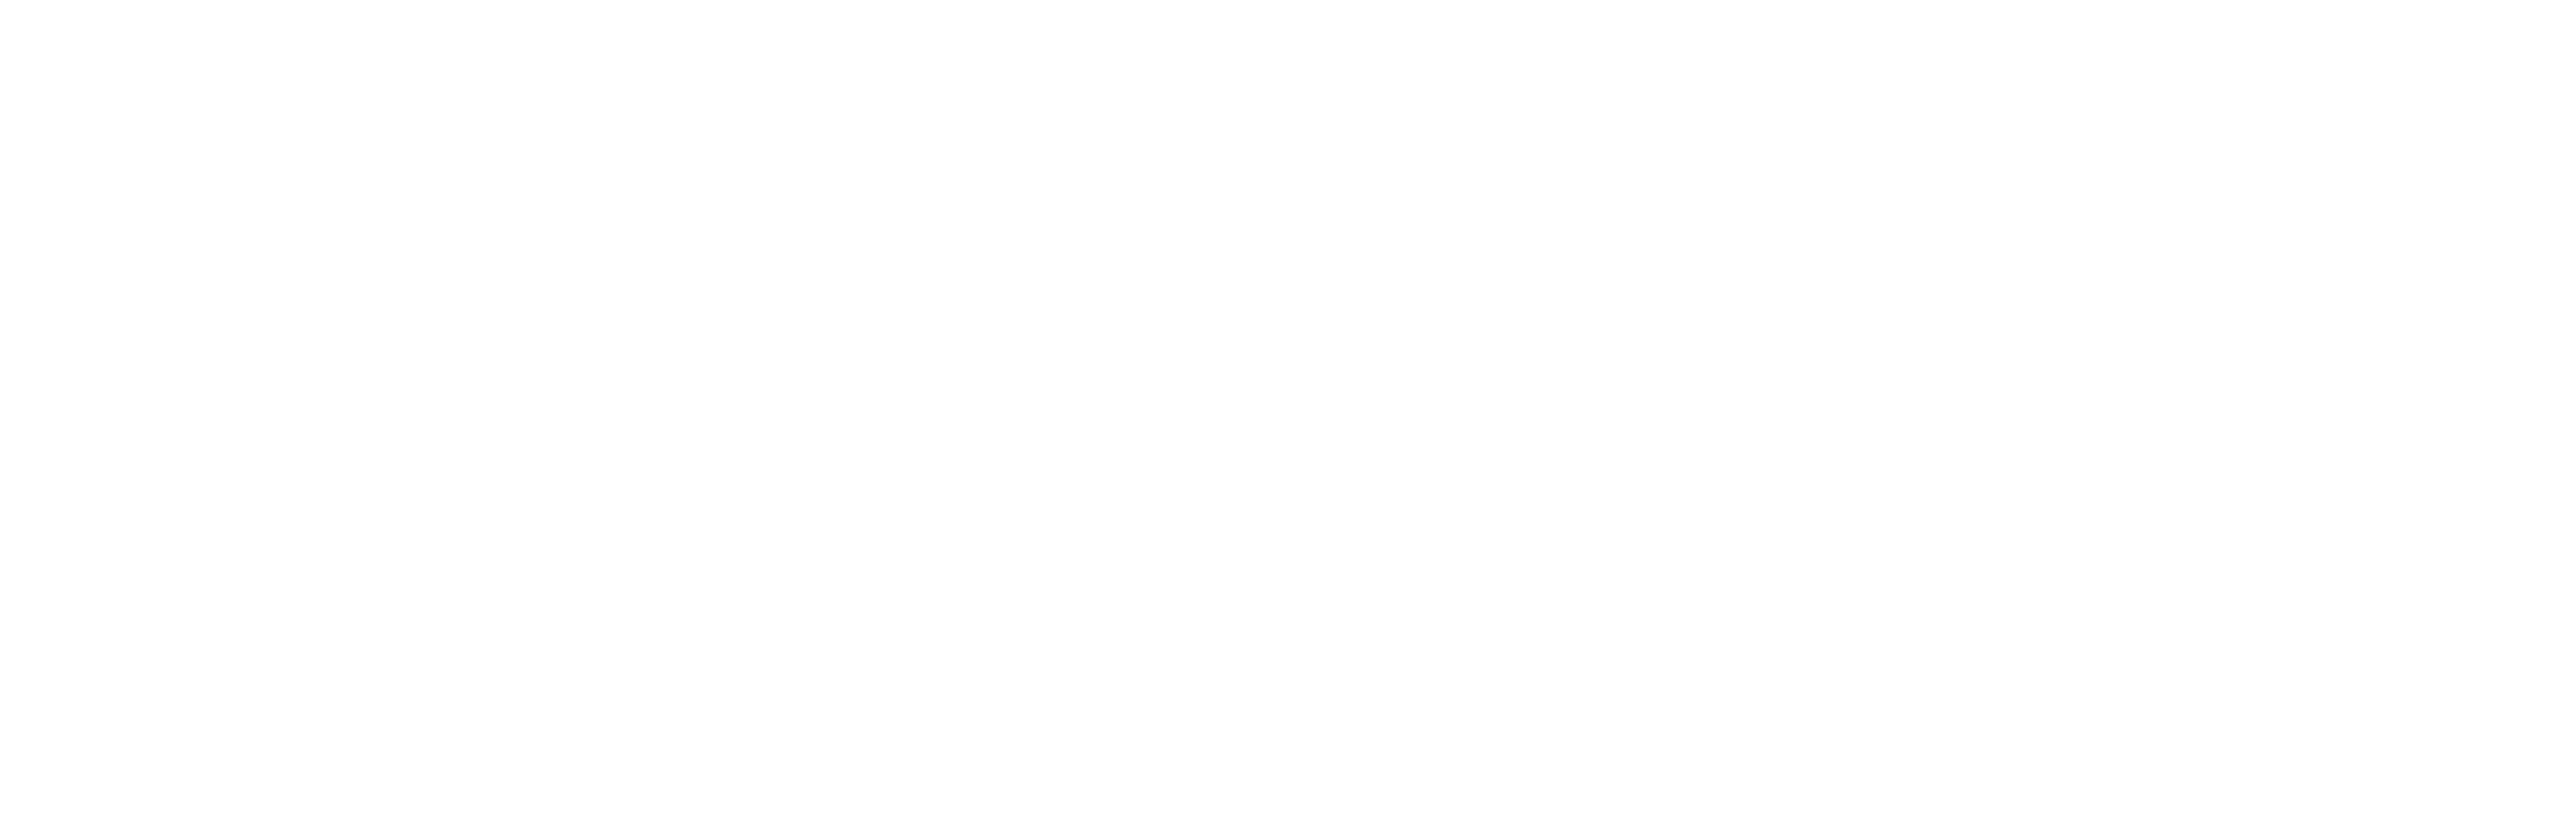 Ponce Financial Group logo large for dark backgrounds (transparent PNG)